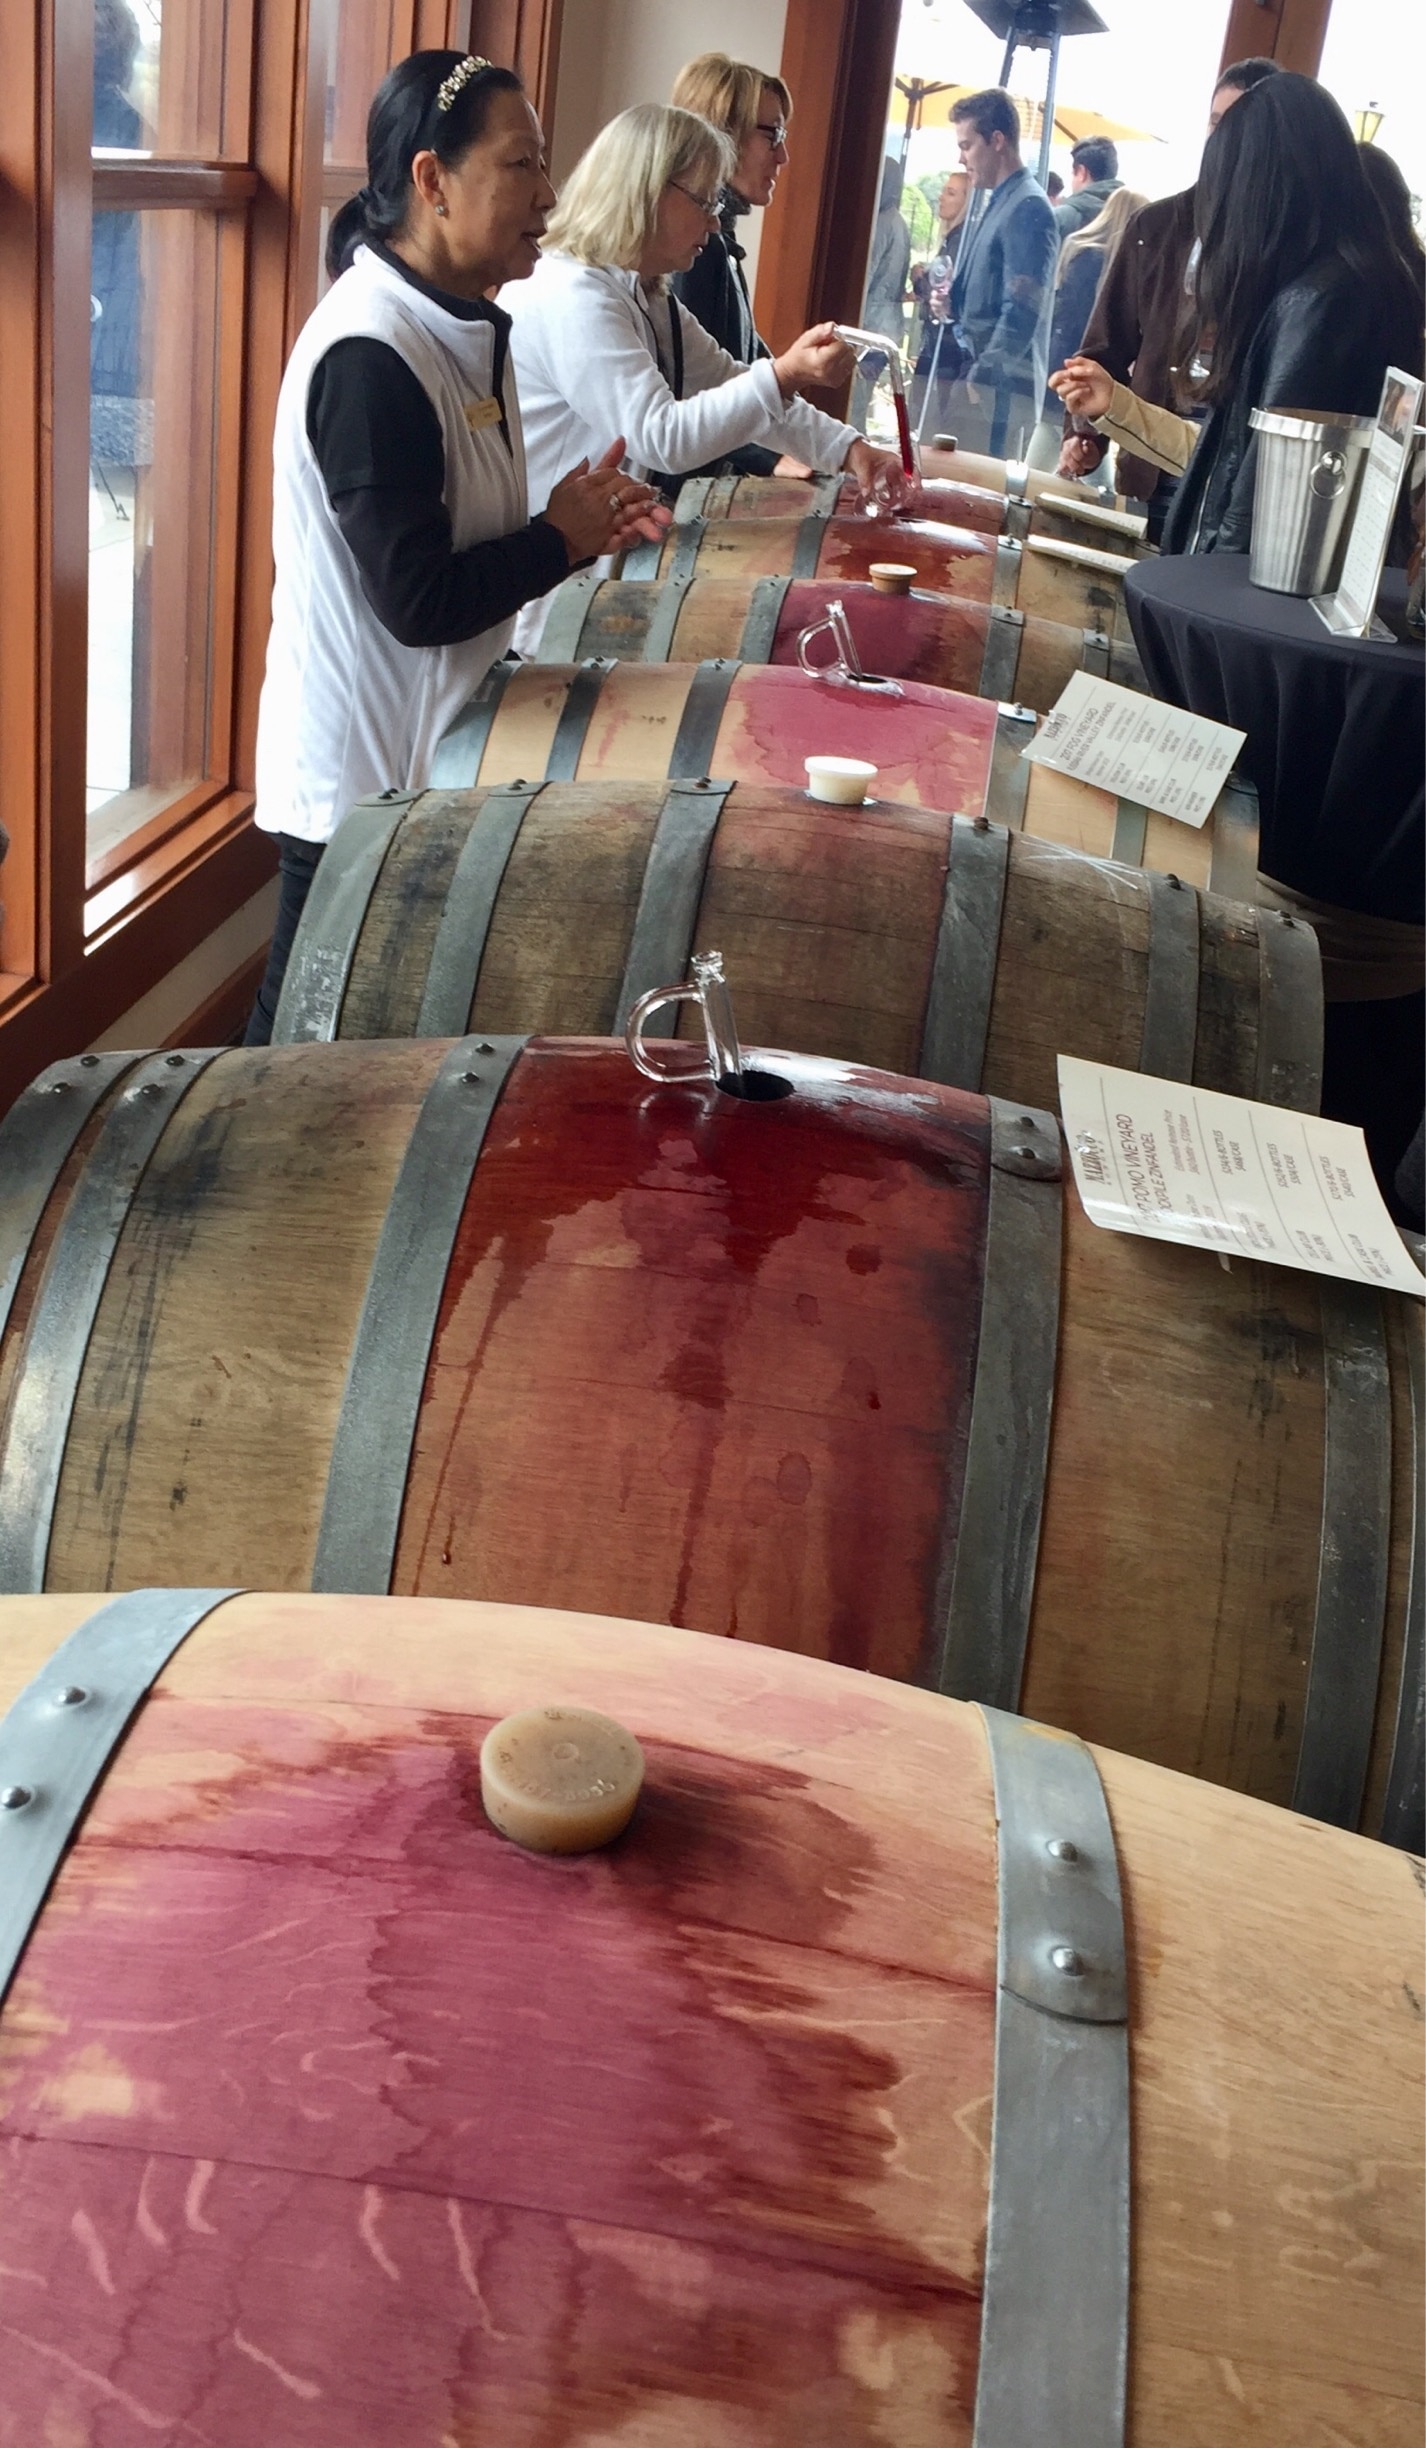 It’s barrel tasting weekend here along the wine road. 